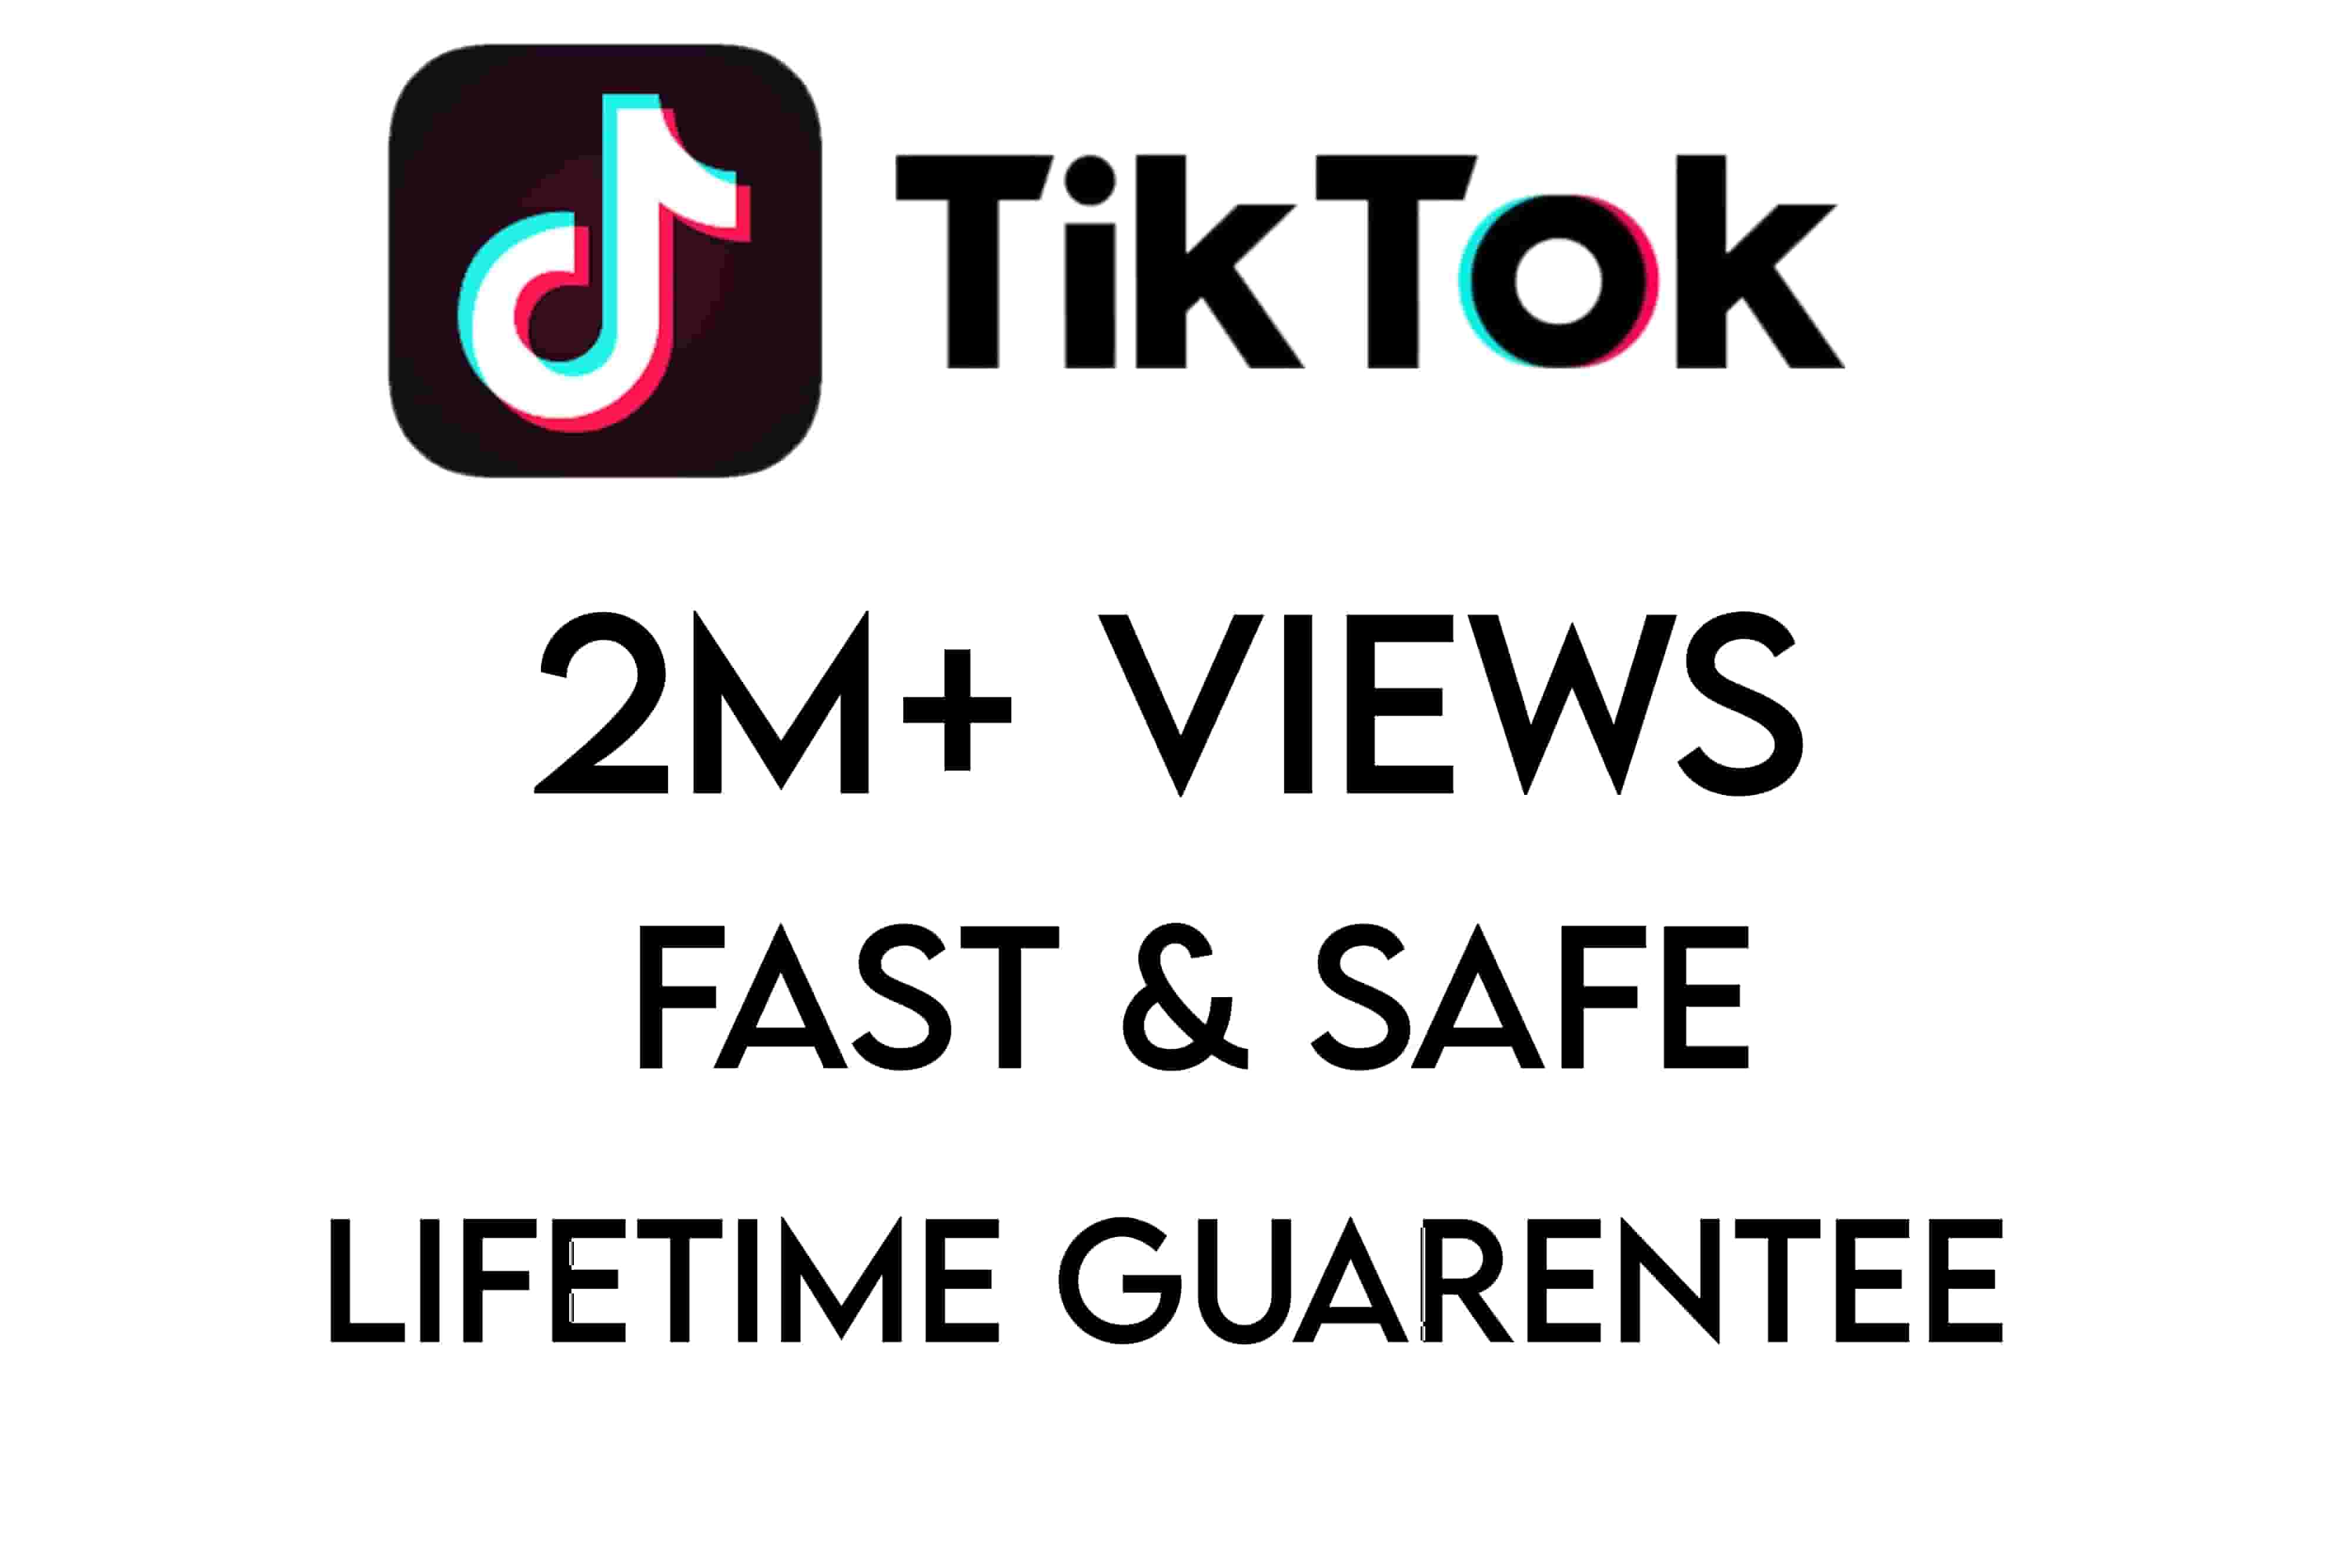 Tiktok 2M+ Views, Fast & Safe, Lifetime Guarentee.